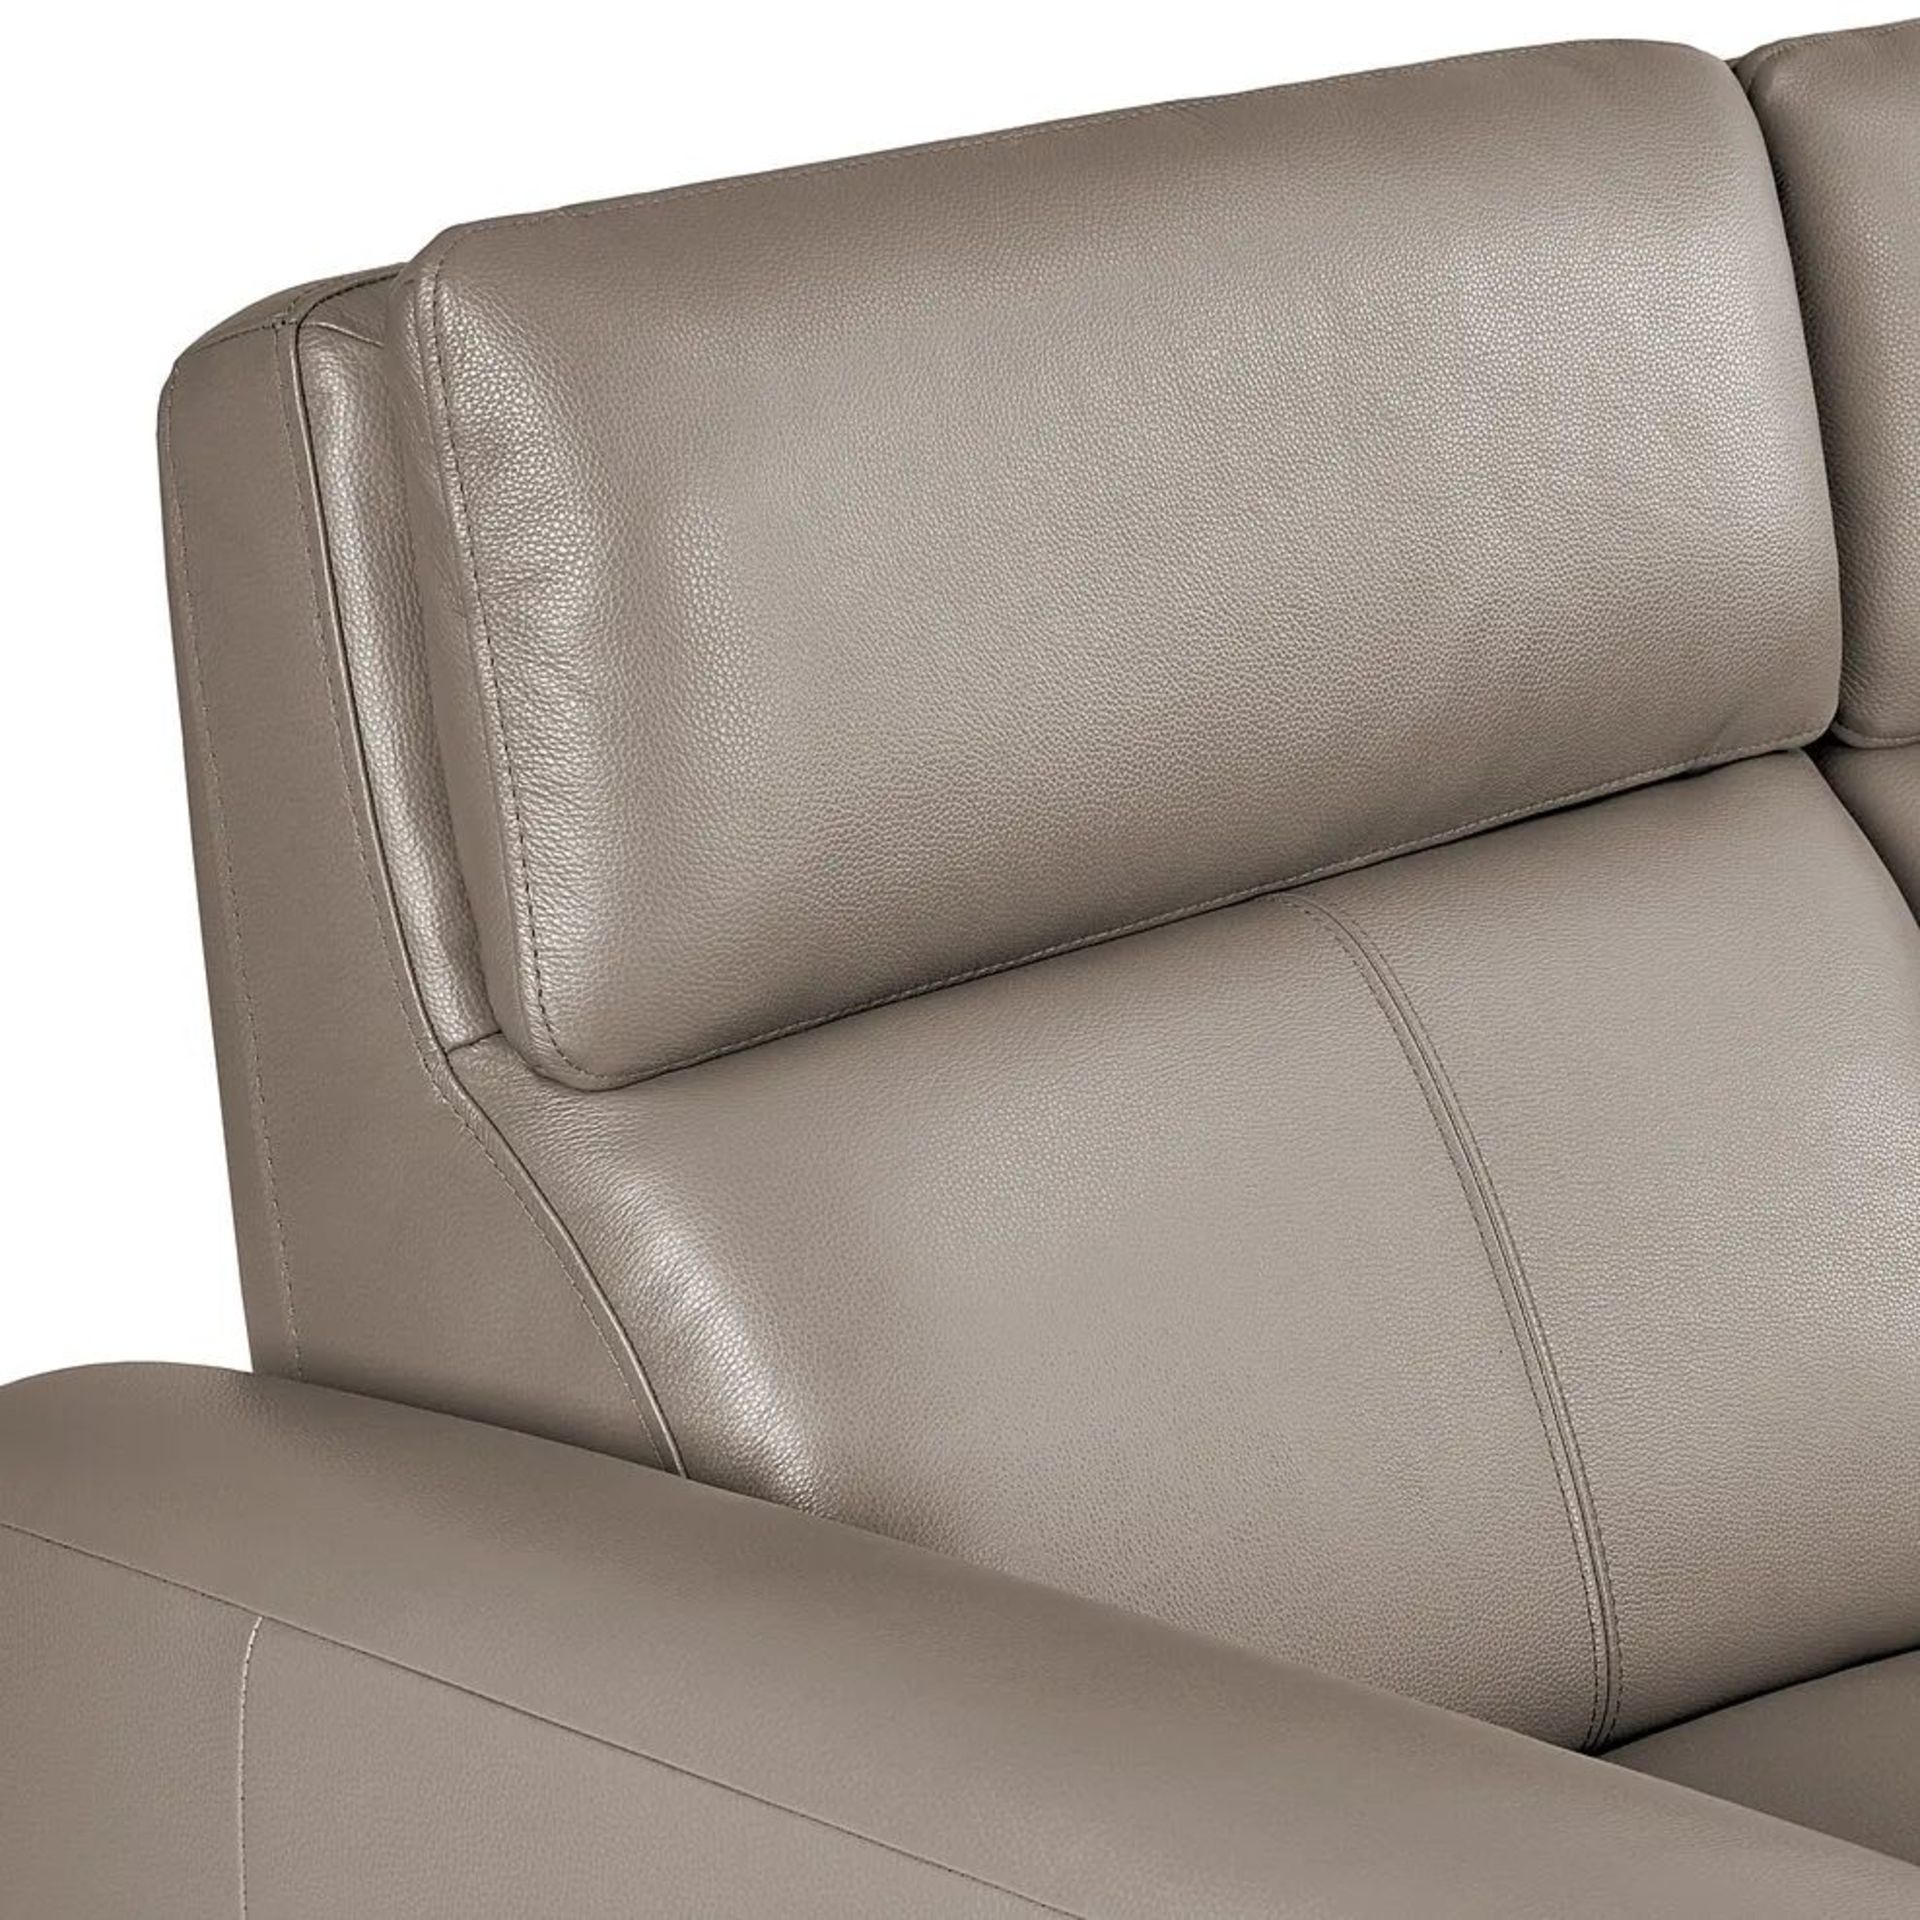 BRAND NEW SAMSON Modular 2 Seat Static Sofa - STONE LEATHER. RRP £1200. Showcasing neat, modern - Image 3 of 4